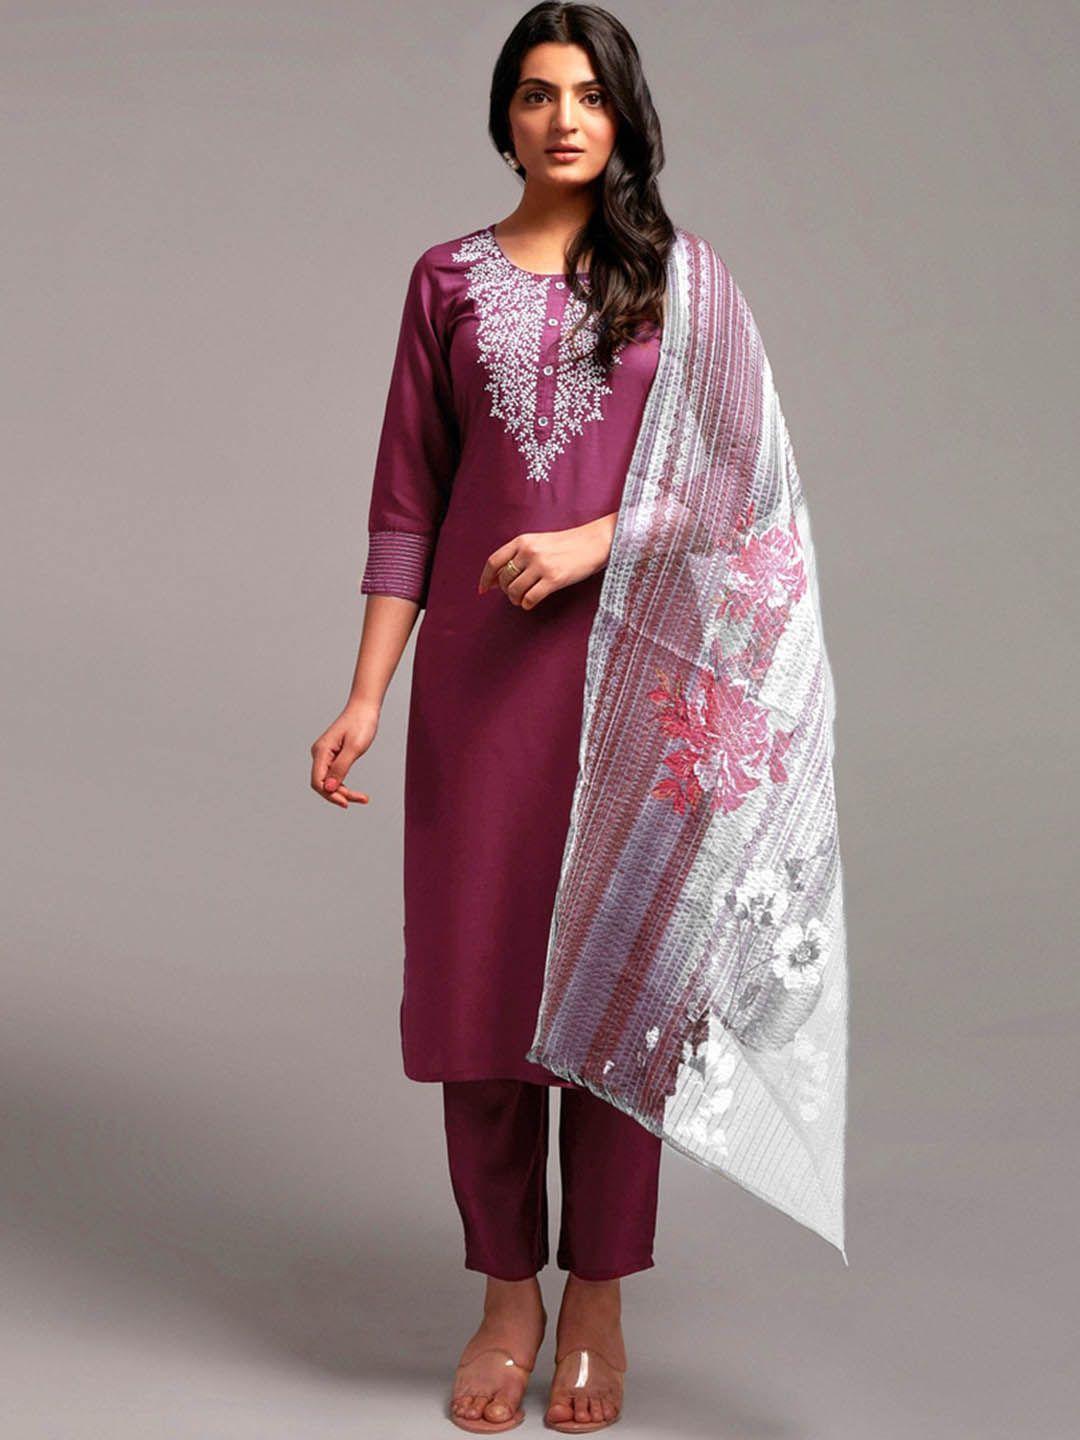 jinax women white floral embroidered regular kurti with pyjamas & with dupatta